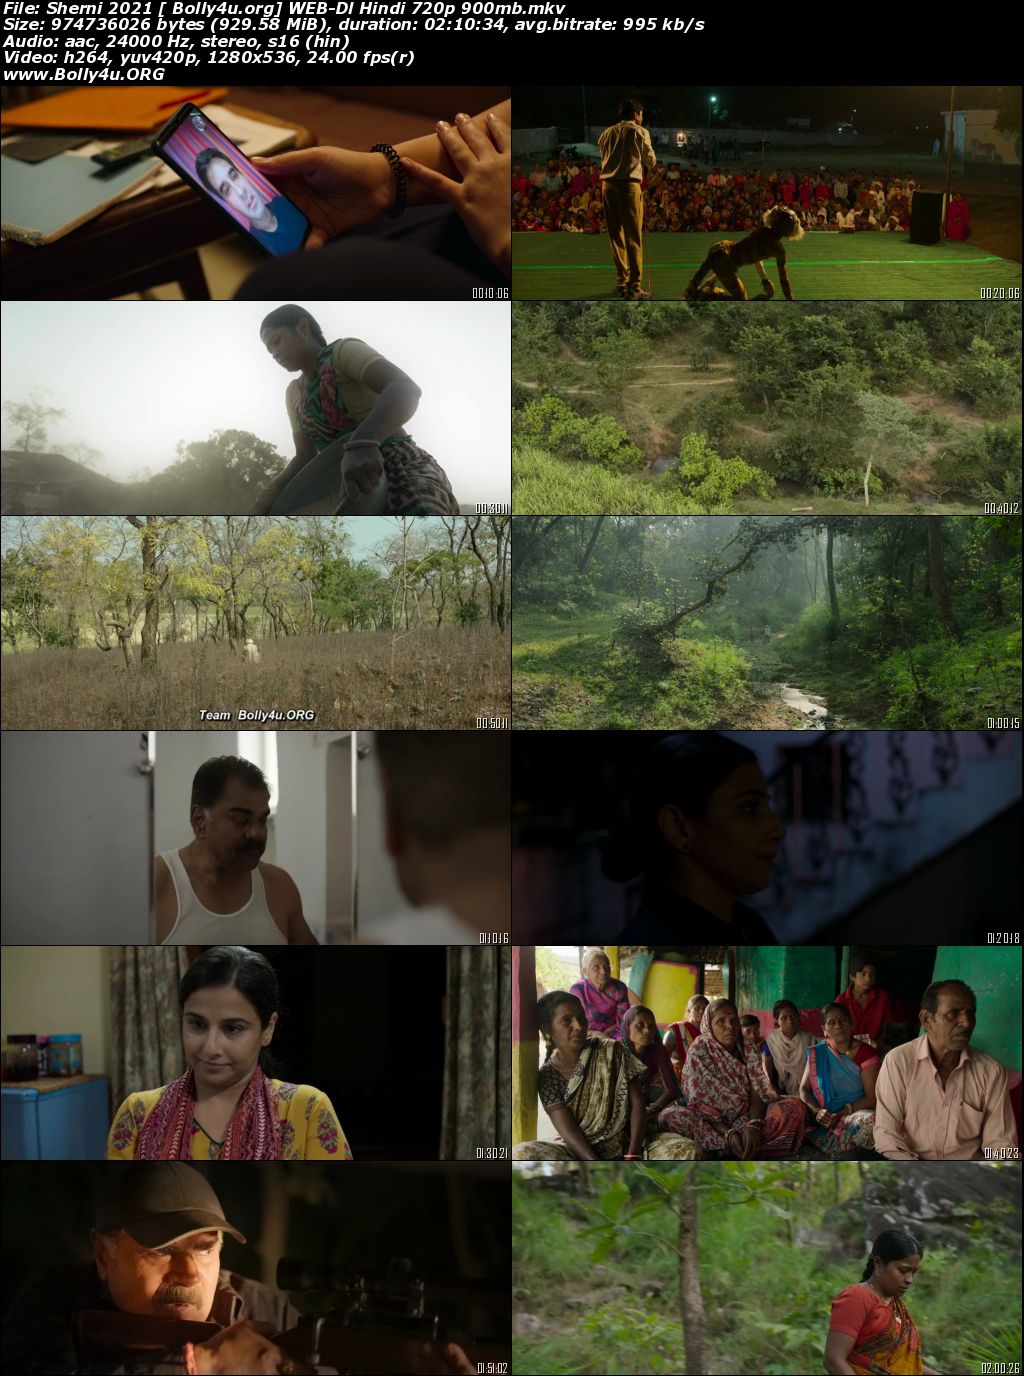 Sherni 2021 WEB-DL 900Mb Hindi Movie Download 720p